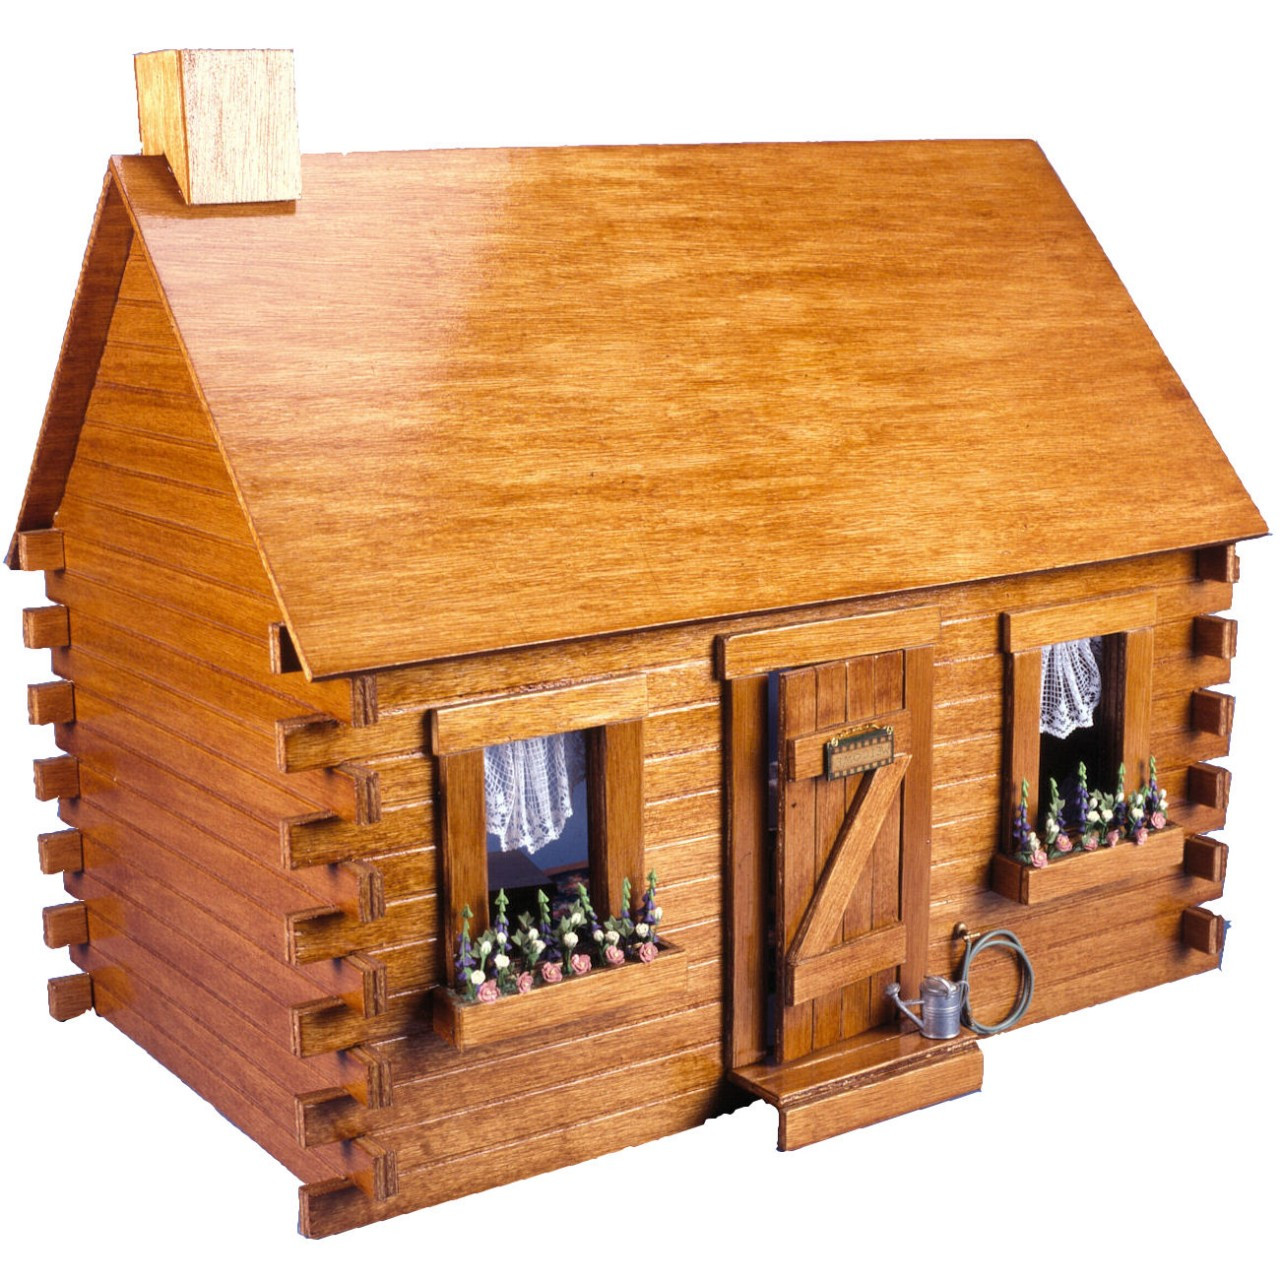 miniature log cabin dollhouse kits